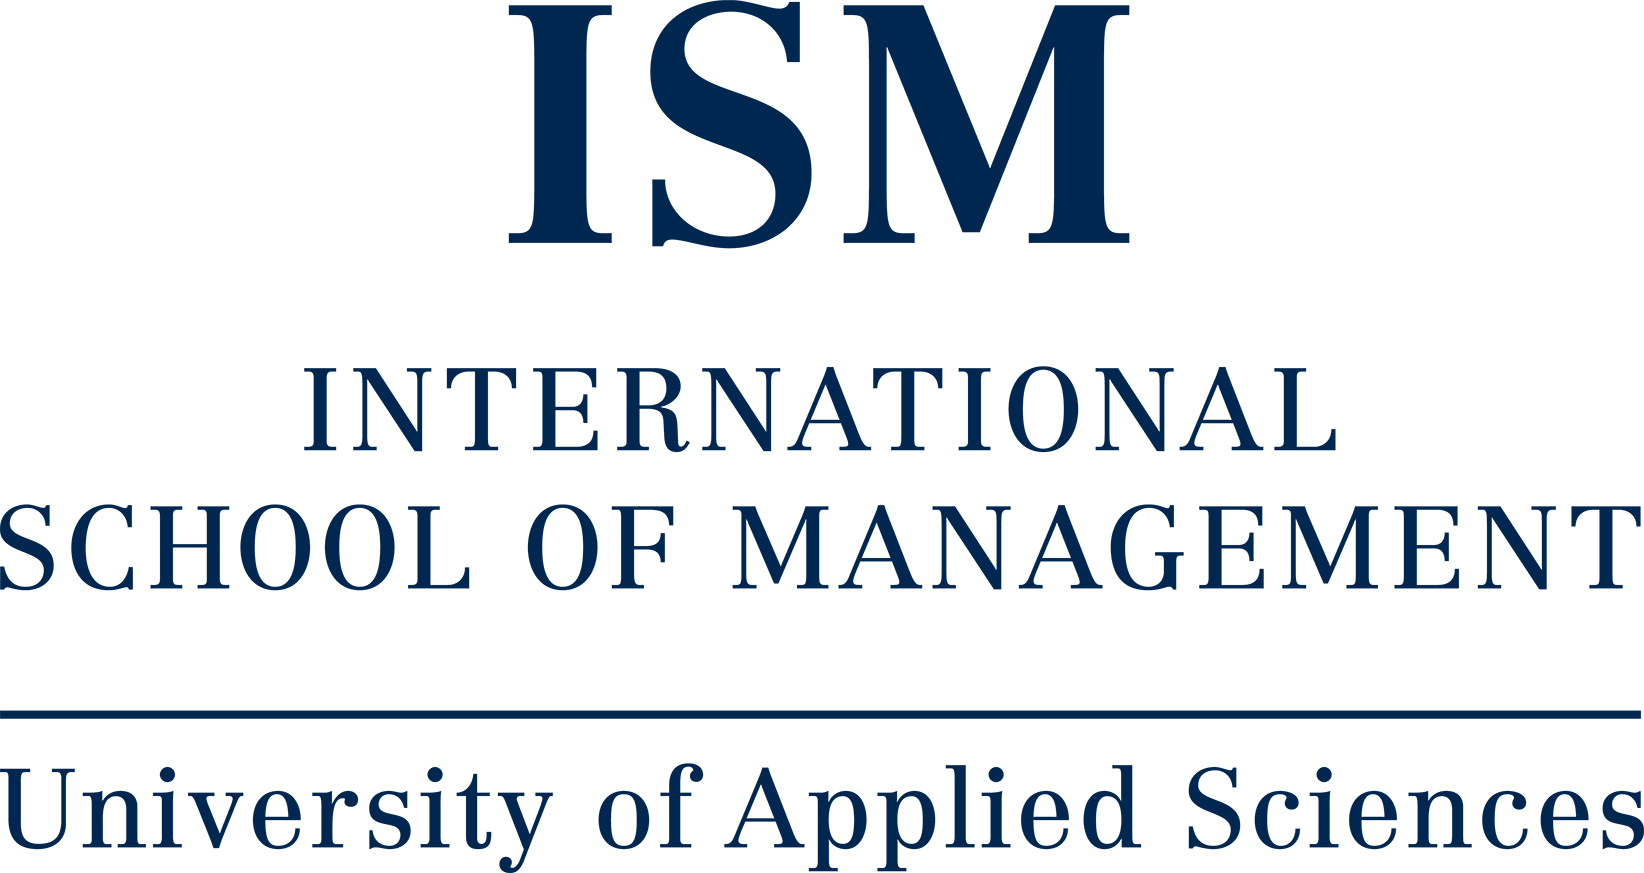 ISM Logo - ISM logo monochrome.png